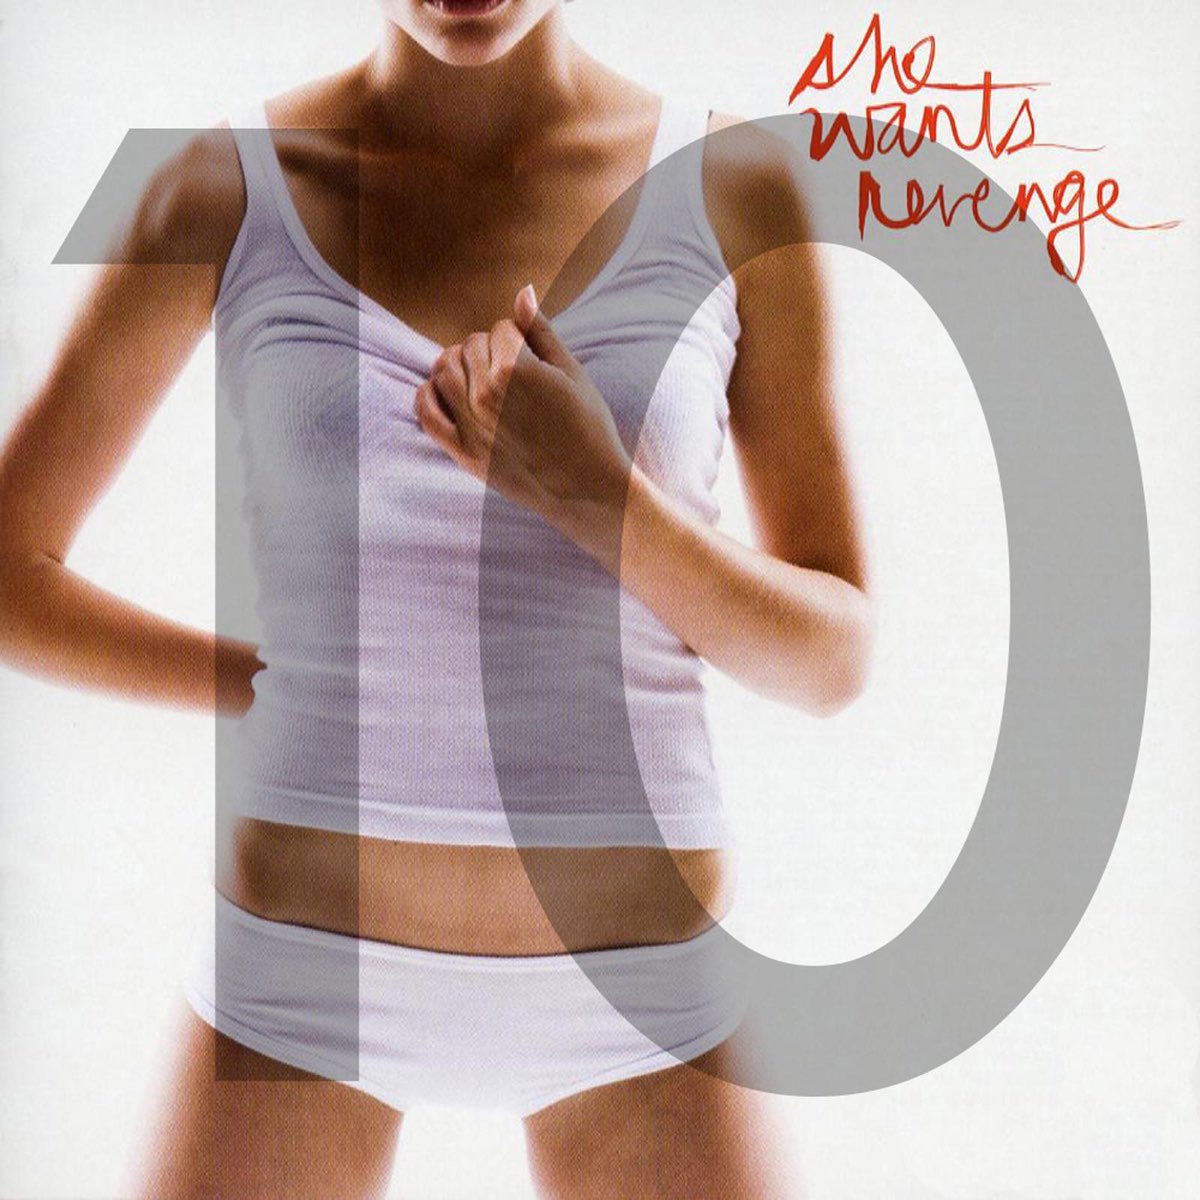 She wants на русском. She wants Revenge album. She wants обложка. She wants Revenge album Cover. She wants Revenge she wants Revenge.